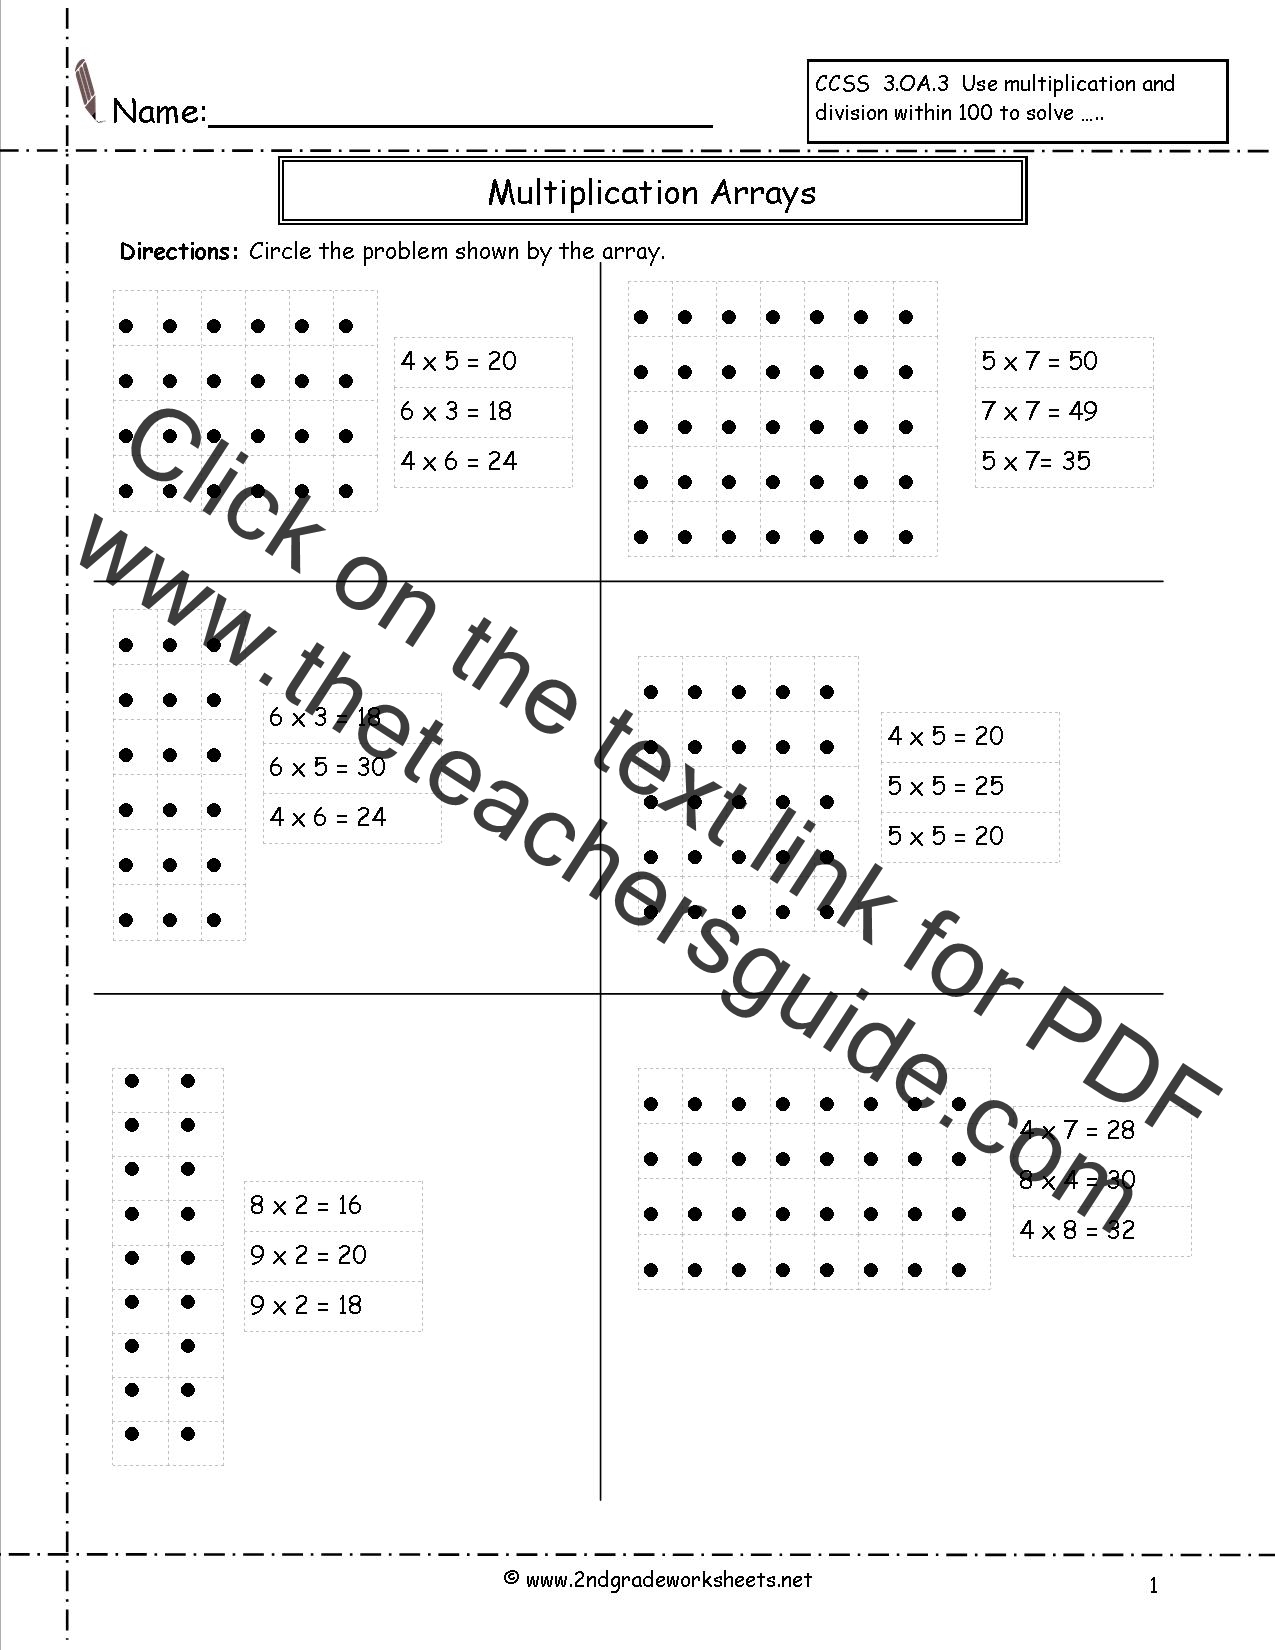 arrays-multiplication-sentence-worksheet-with-answer-key-download-printable-pdf-templateroller